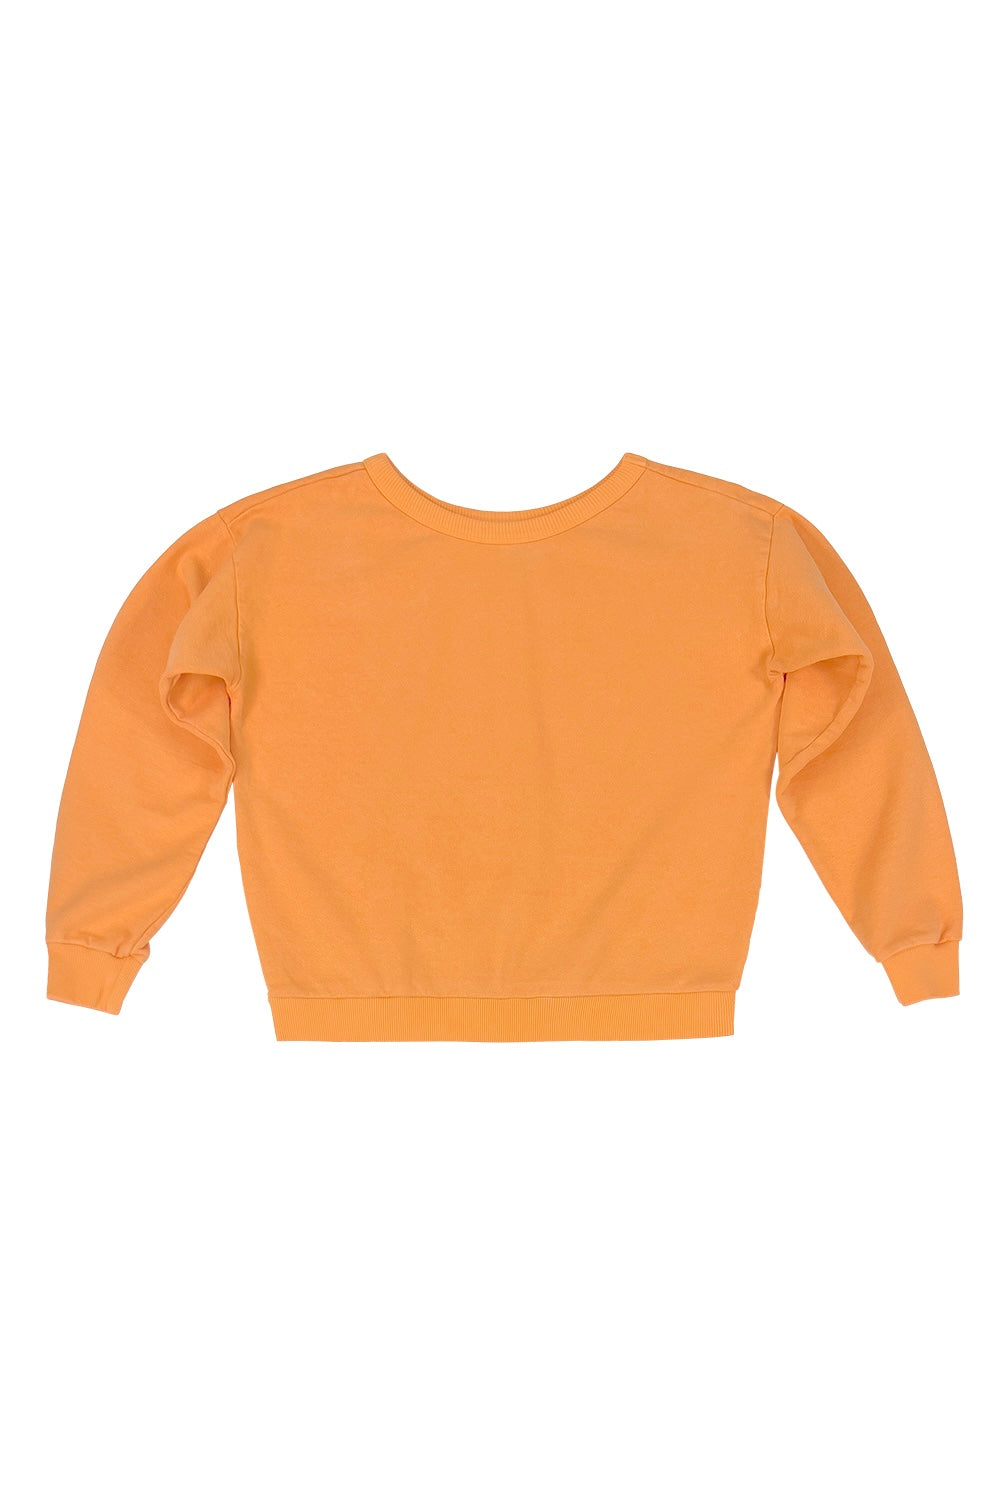 Laguna Cropped Sweatshirt | Jungmaven Hemp Clothing & Accessories / Color:Apricot Crush